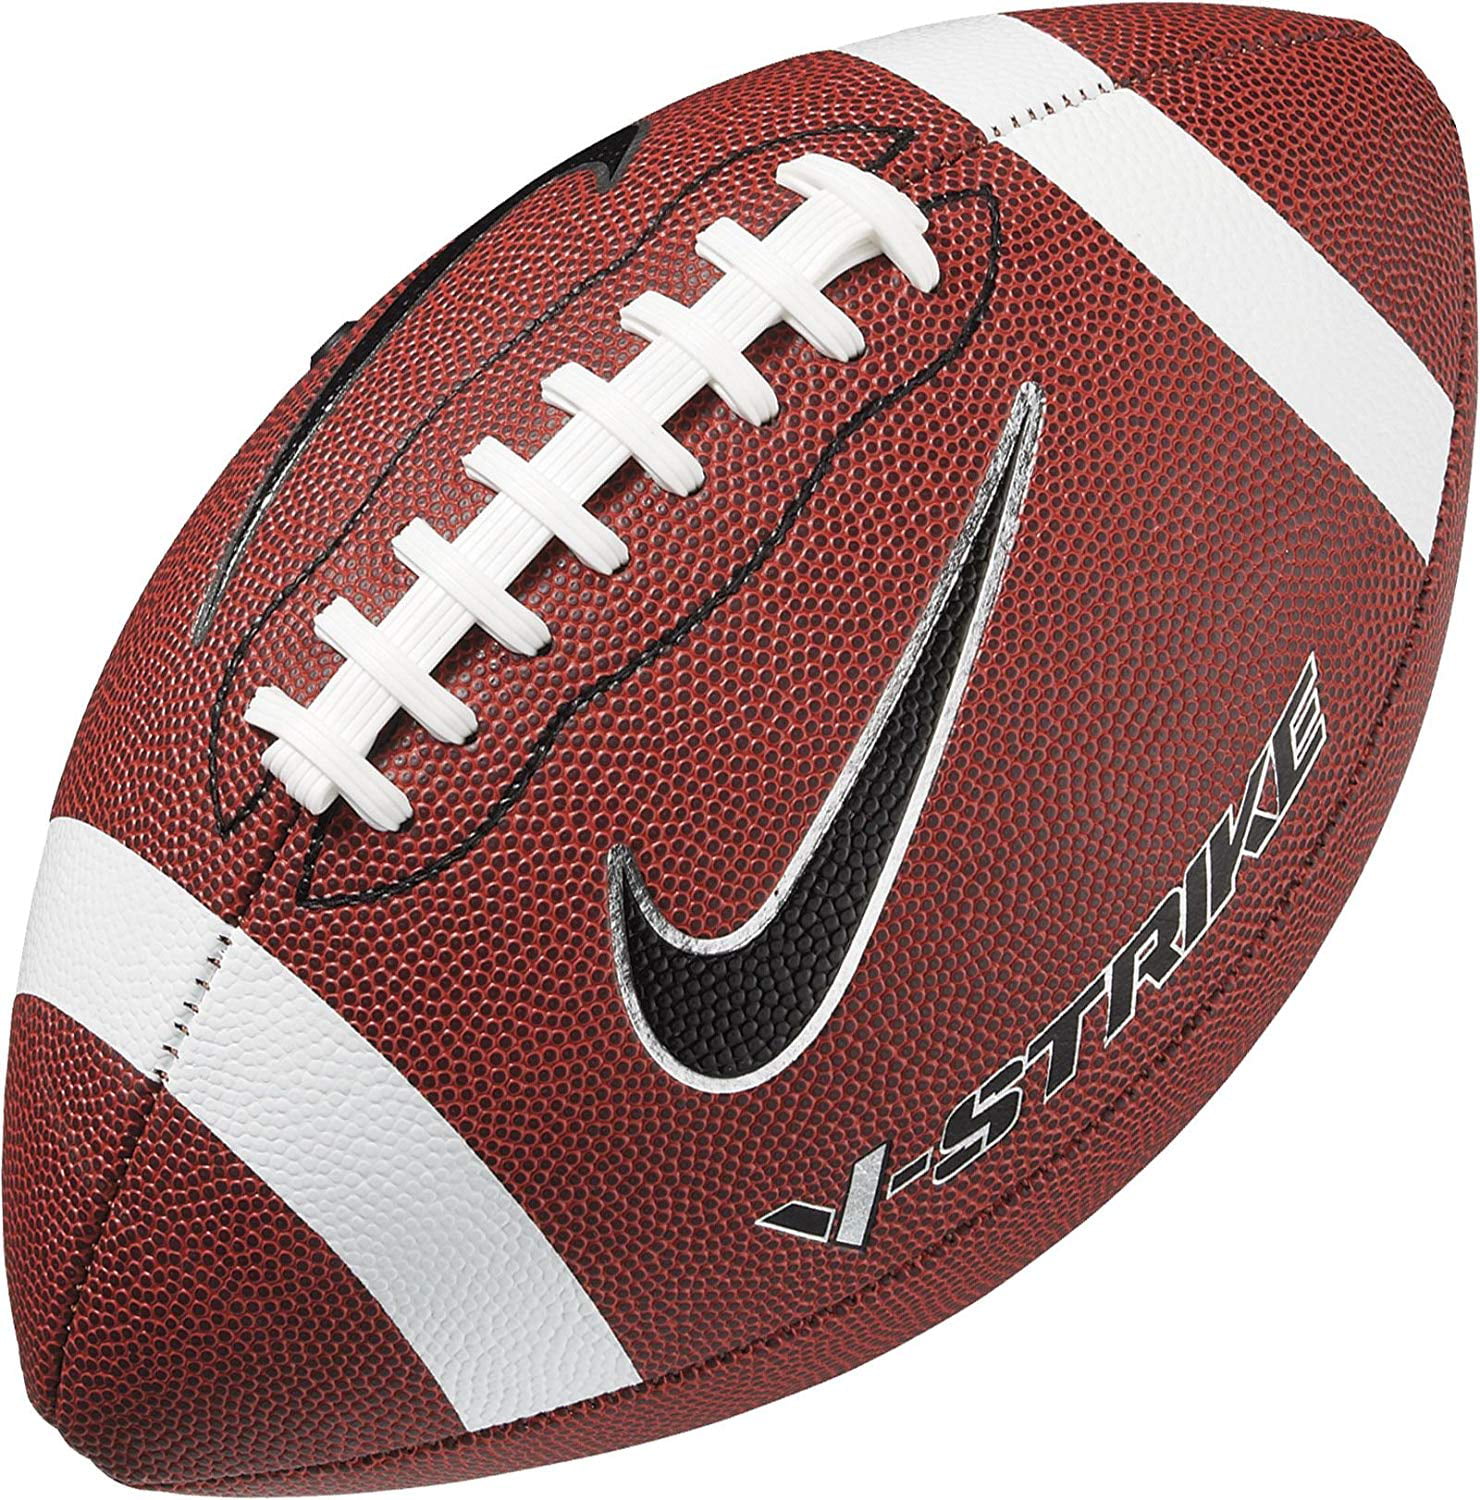 Nike Vapor Strike V-Strike youth Junior Size Football Game Ball